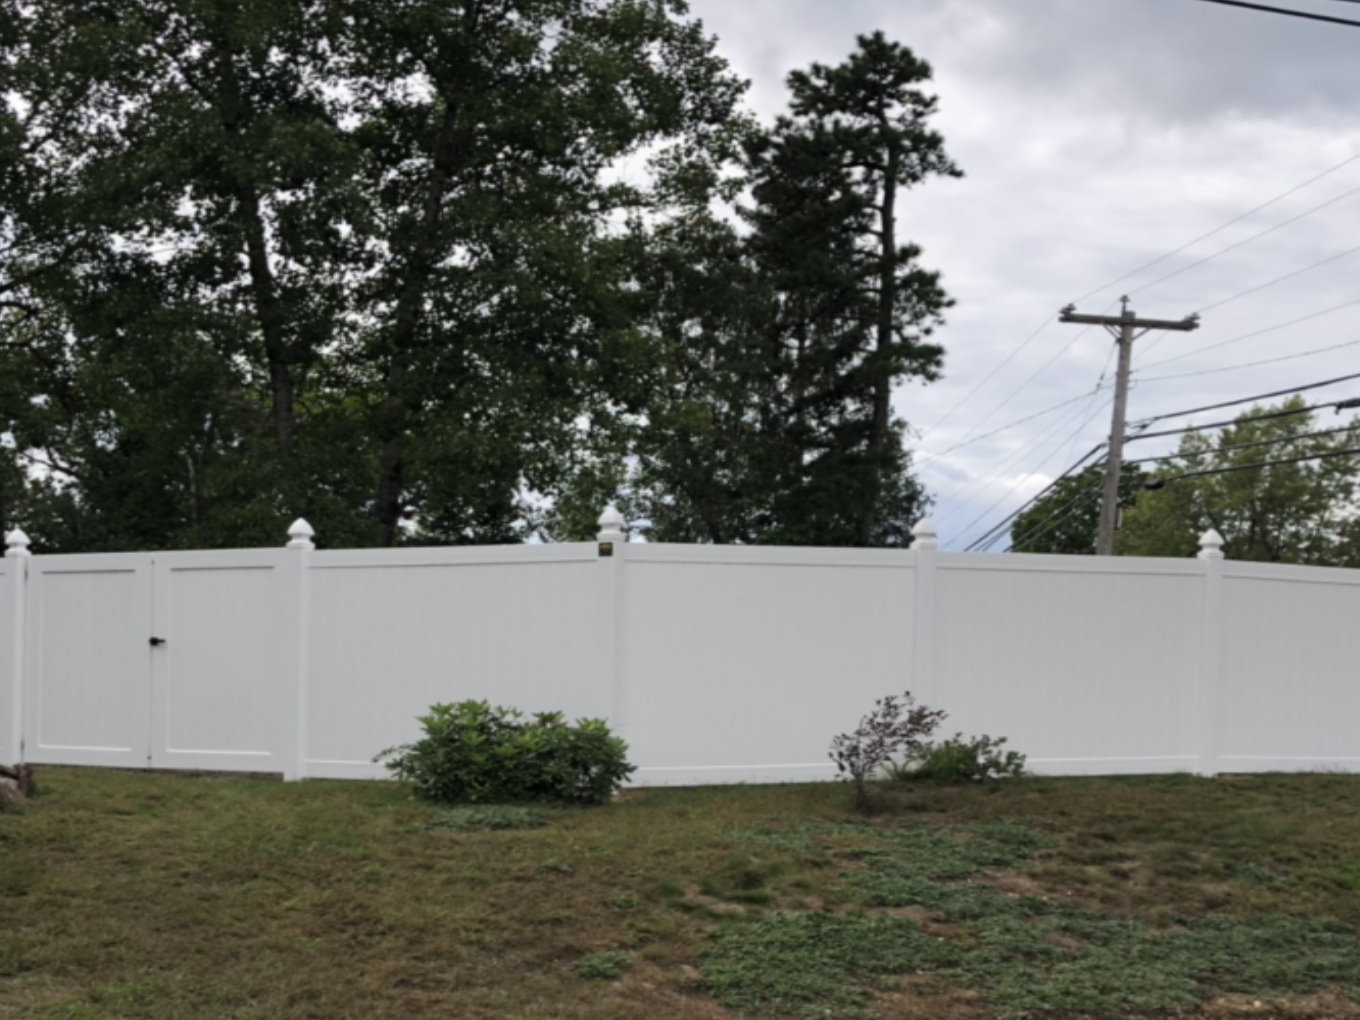 Hooksett New Hampshire Fence Project Photo